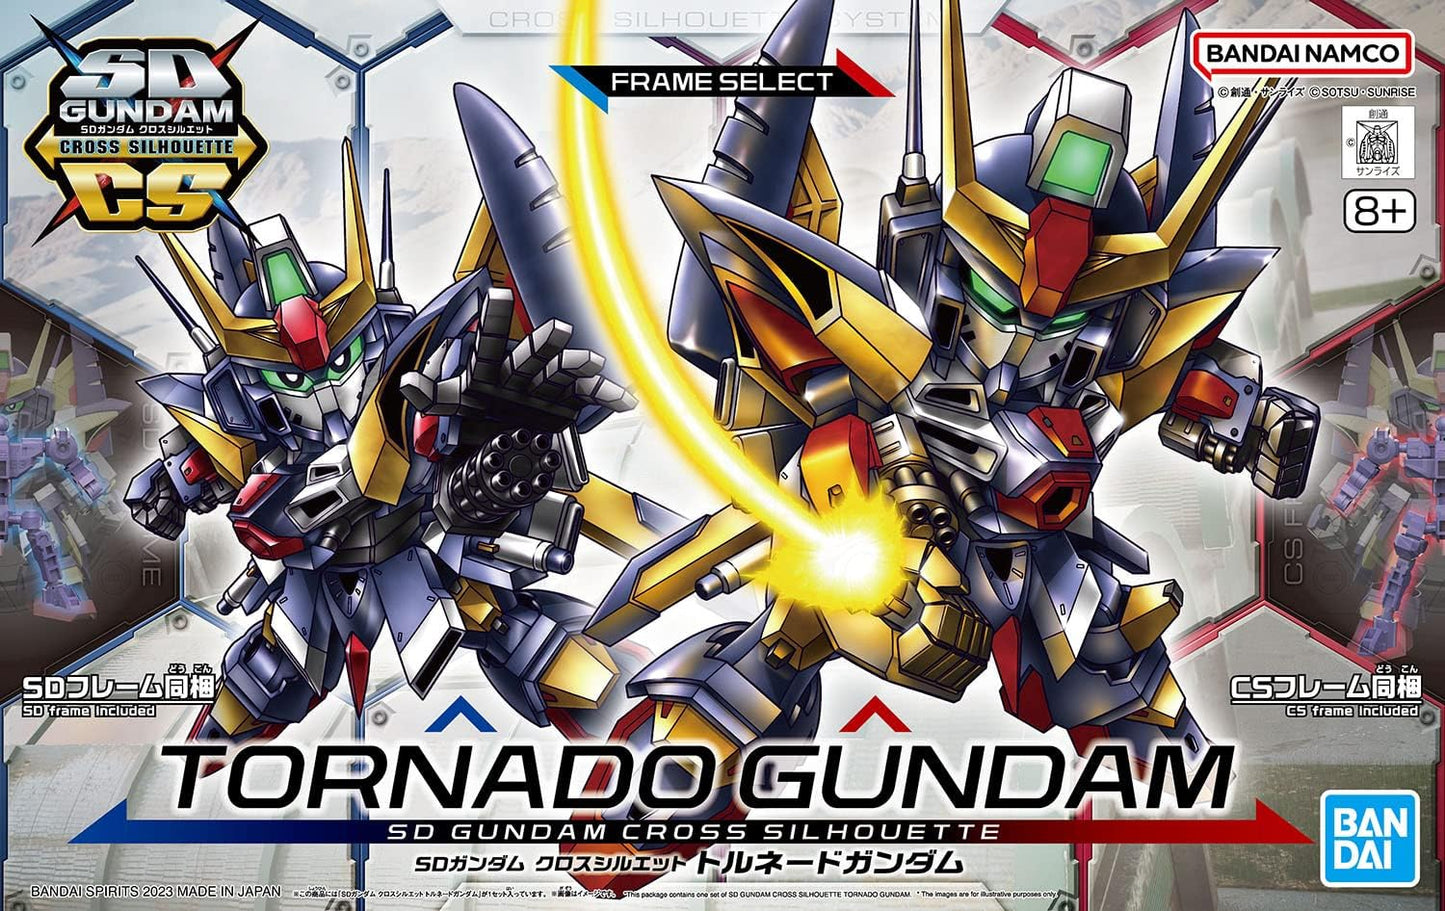 SD Gundam Cross Silhouette "SD Gundam G Generation" Tornado Gundam | animota